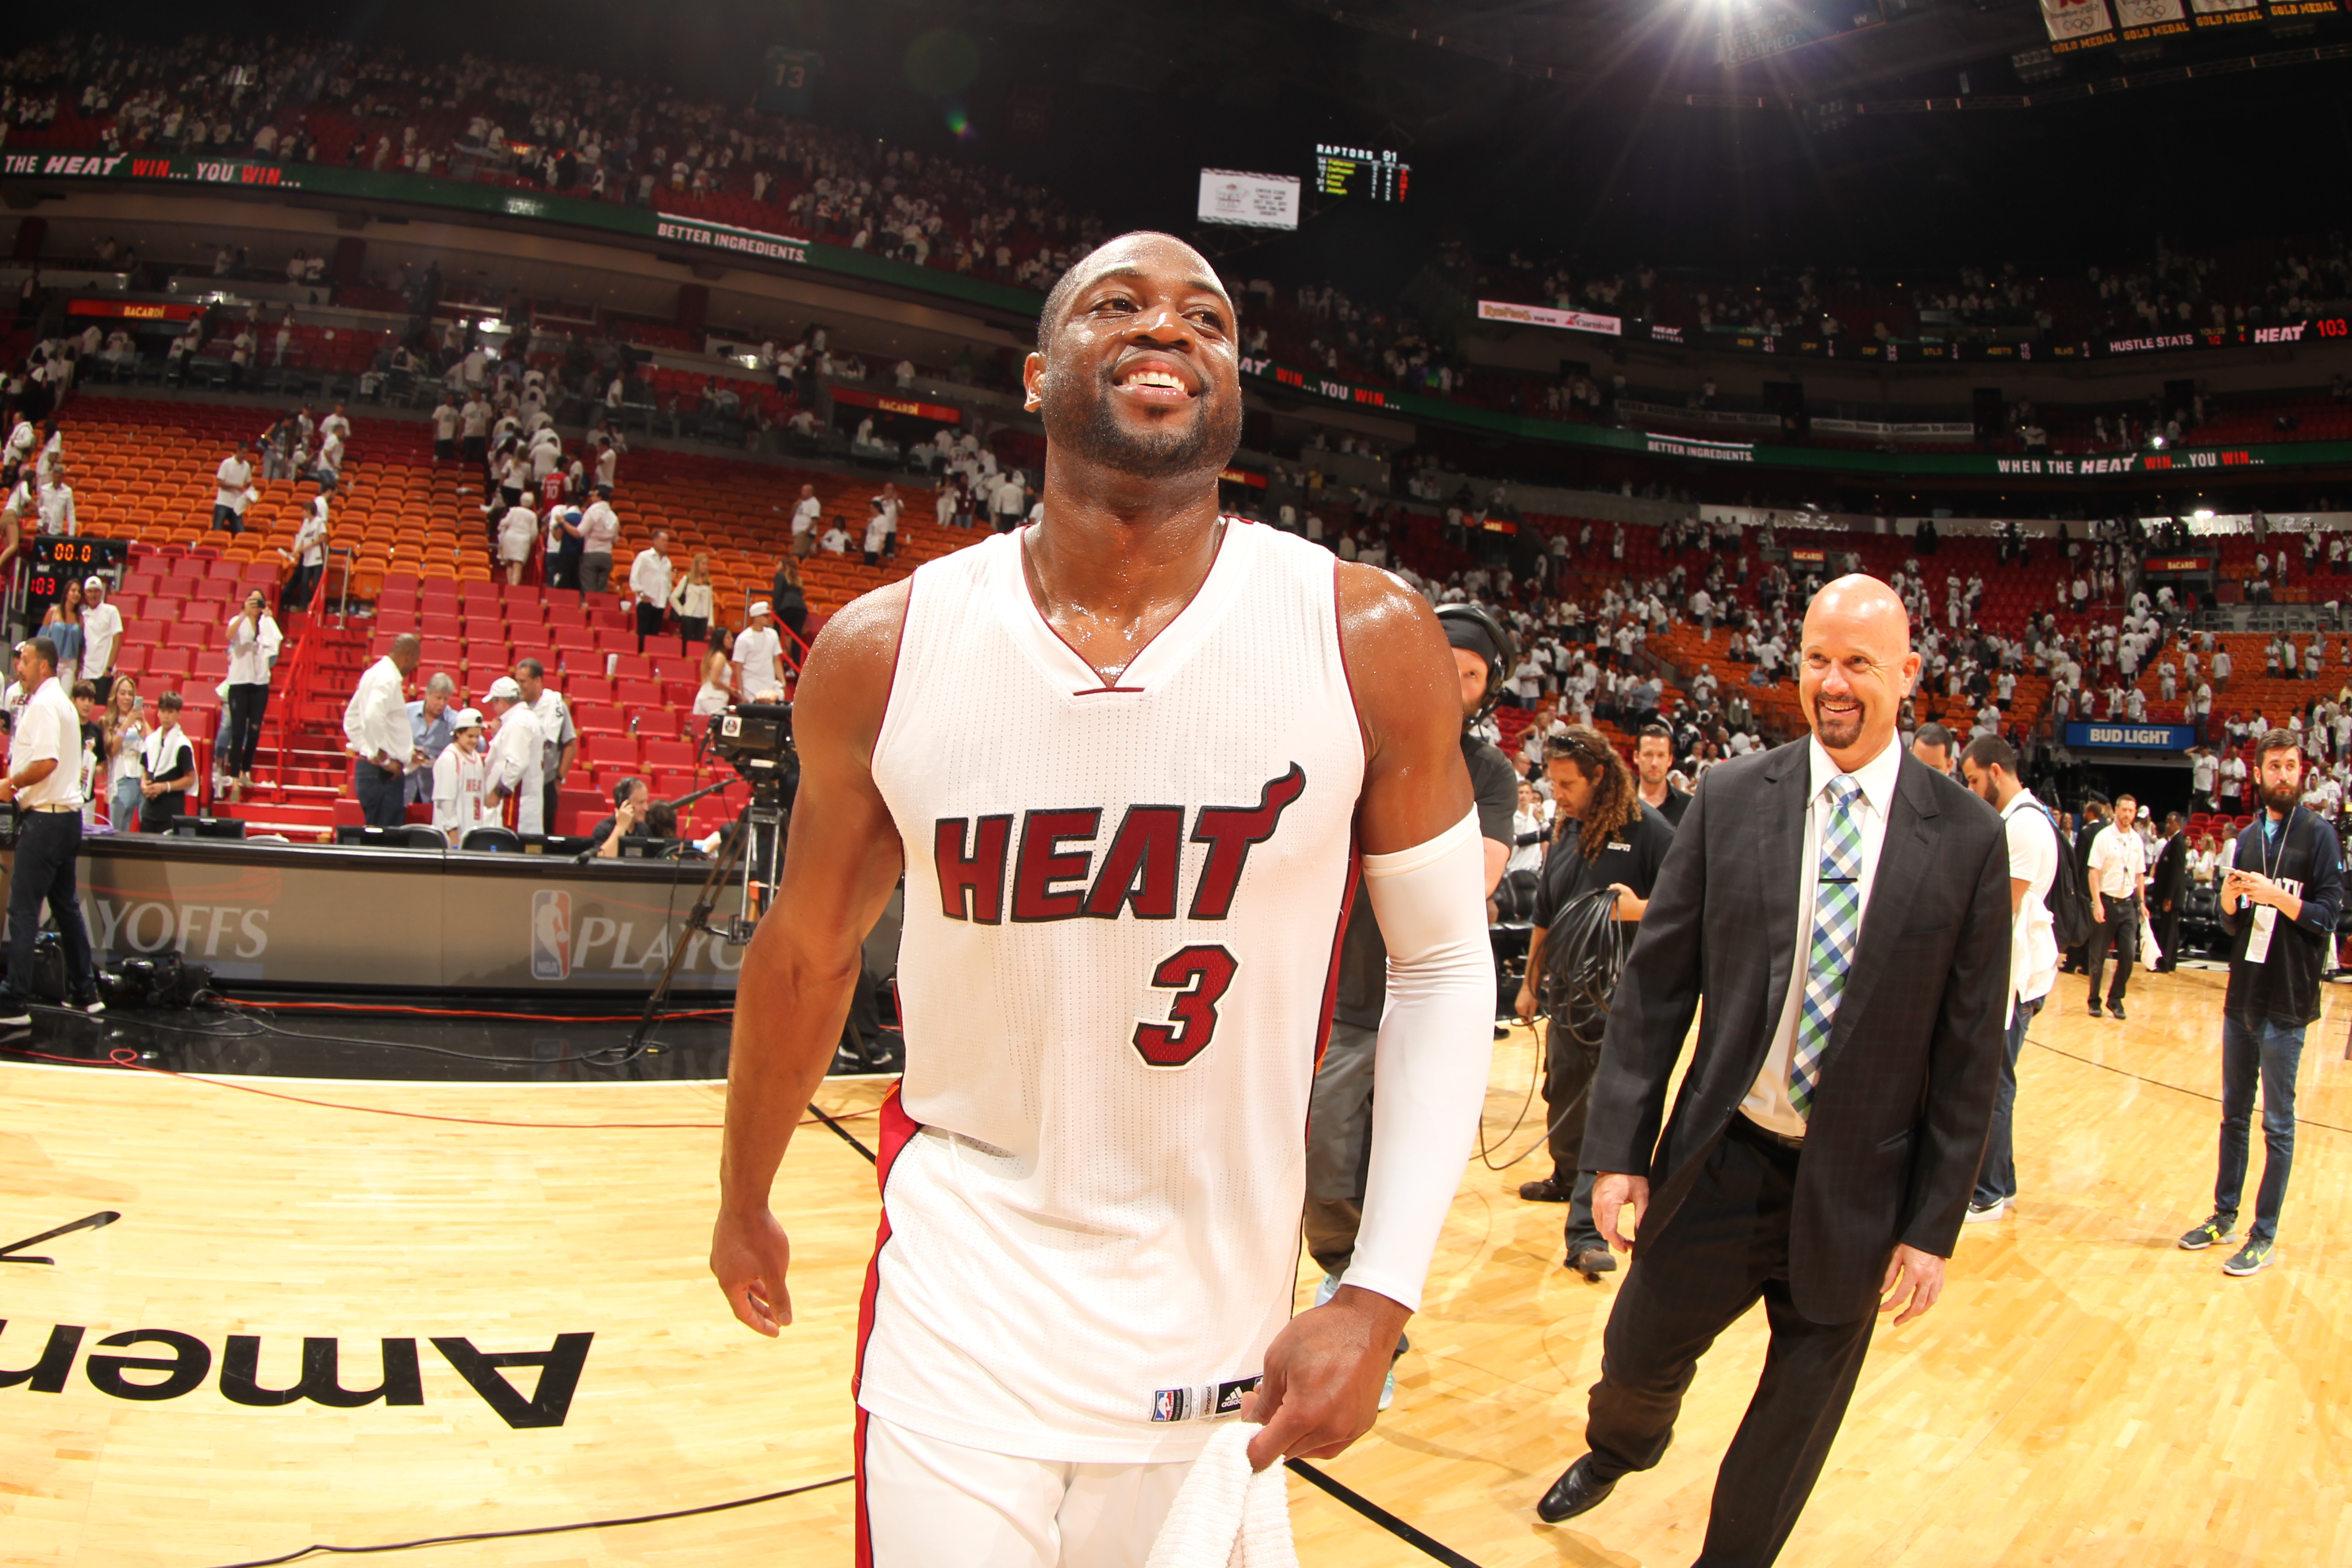 Dwyane Wade on his return to the Miami Heat: “I always felt that